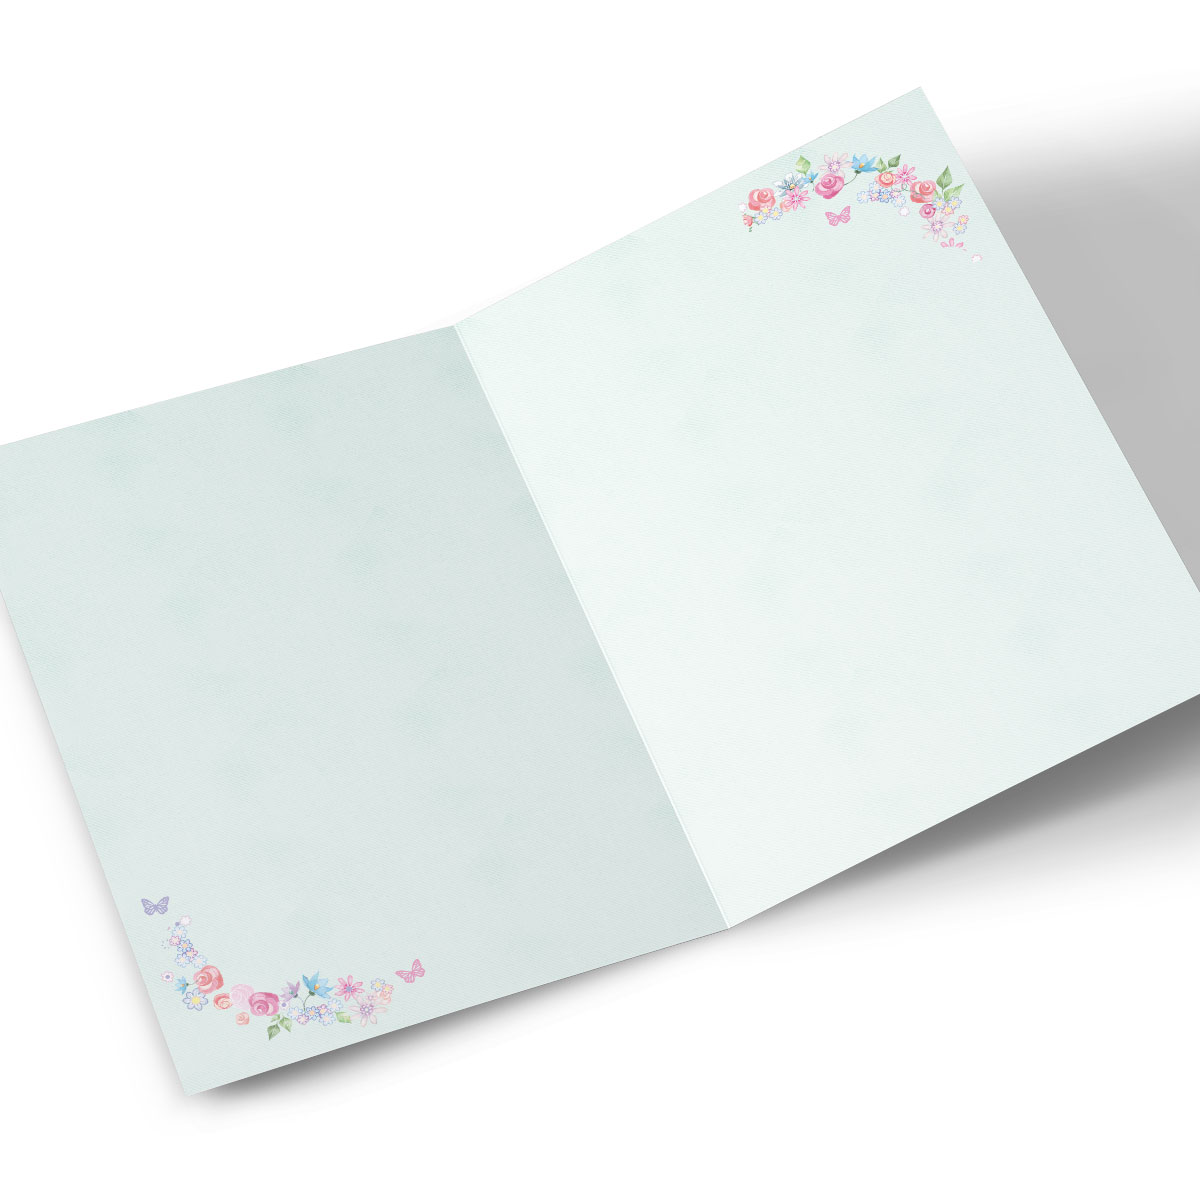 Personalised Birthday Card - Flowers & Birdhouse, Editable Age